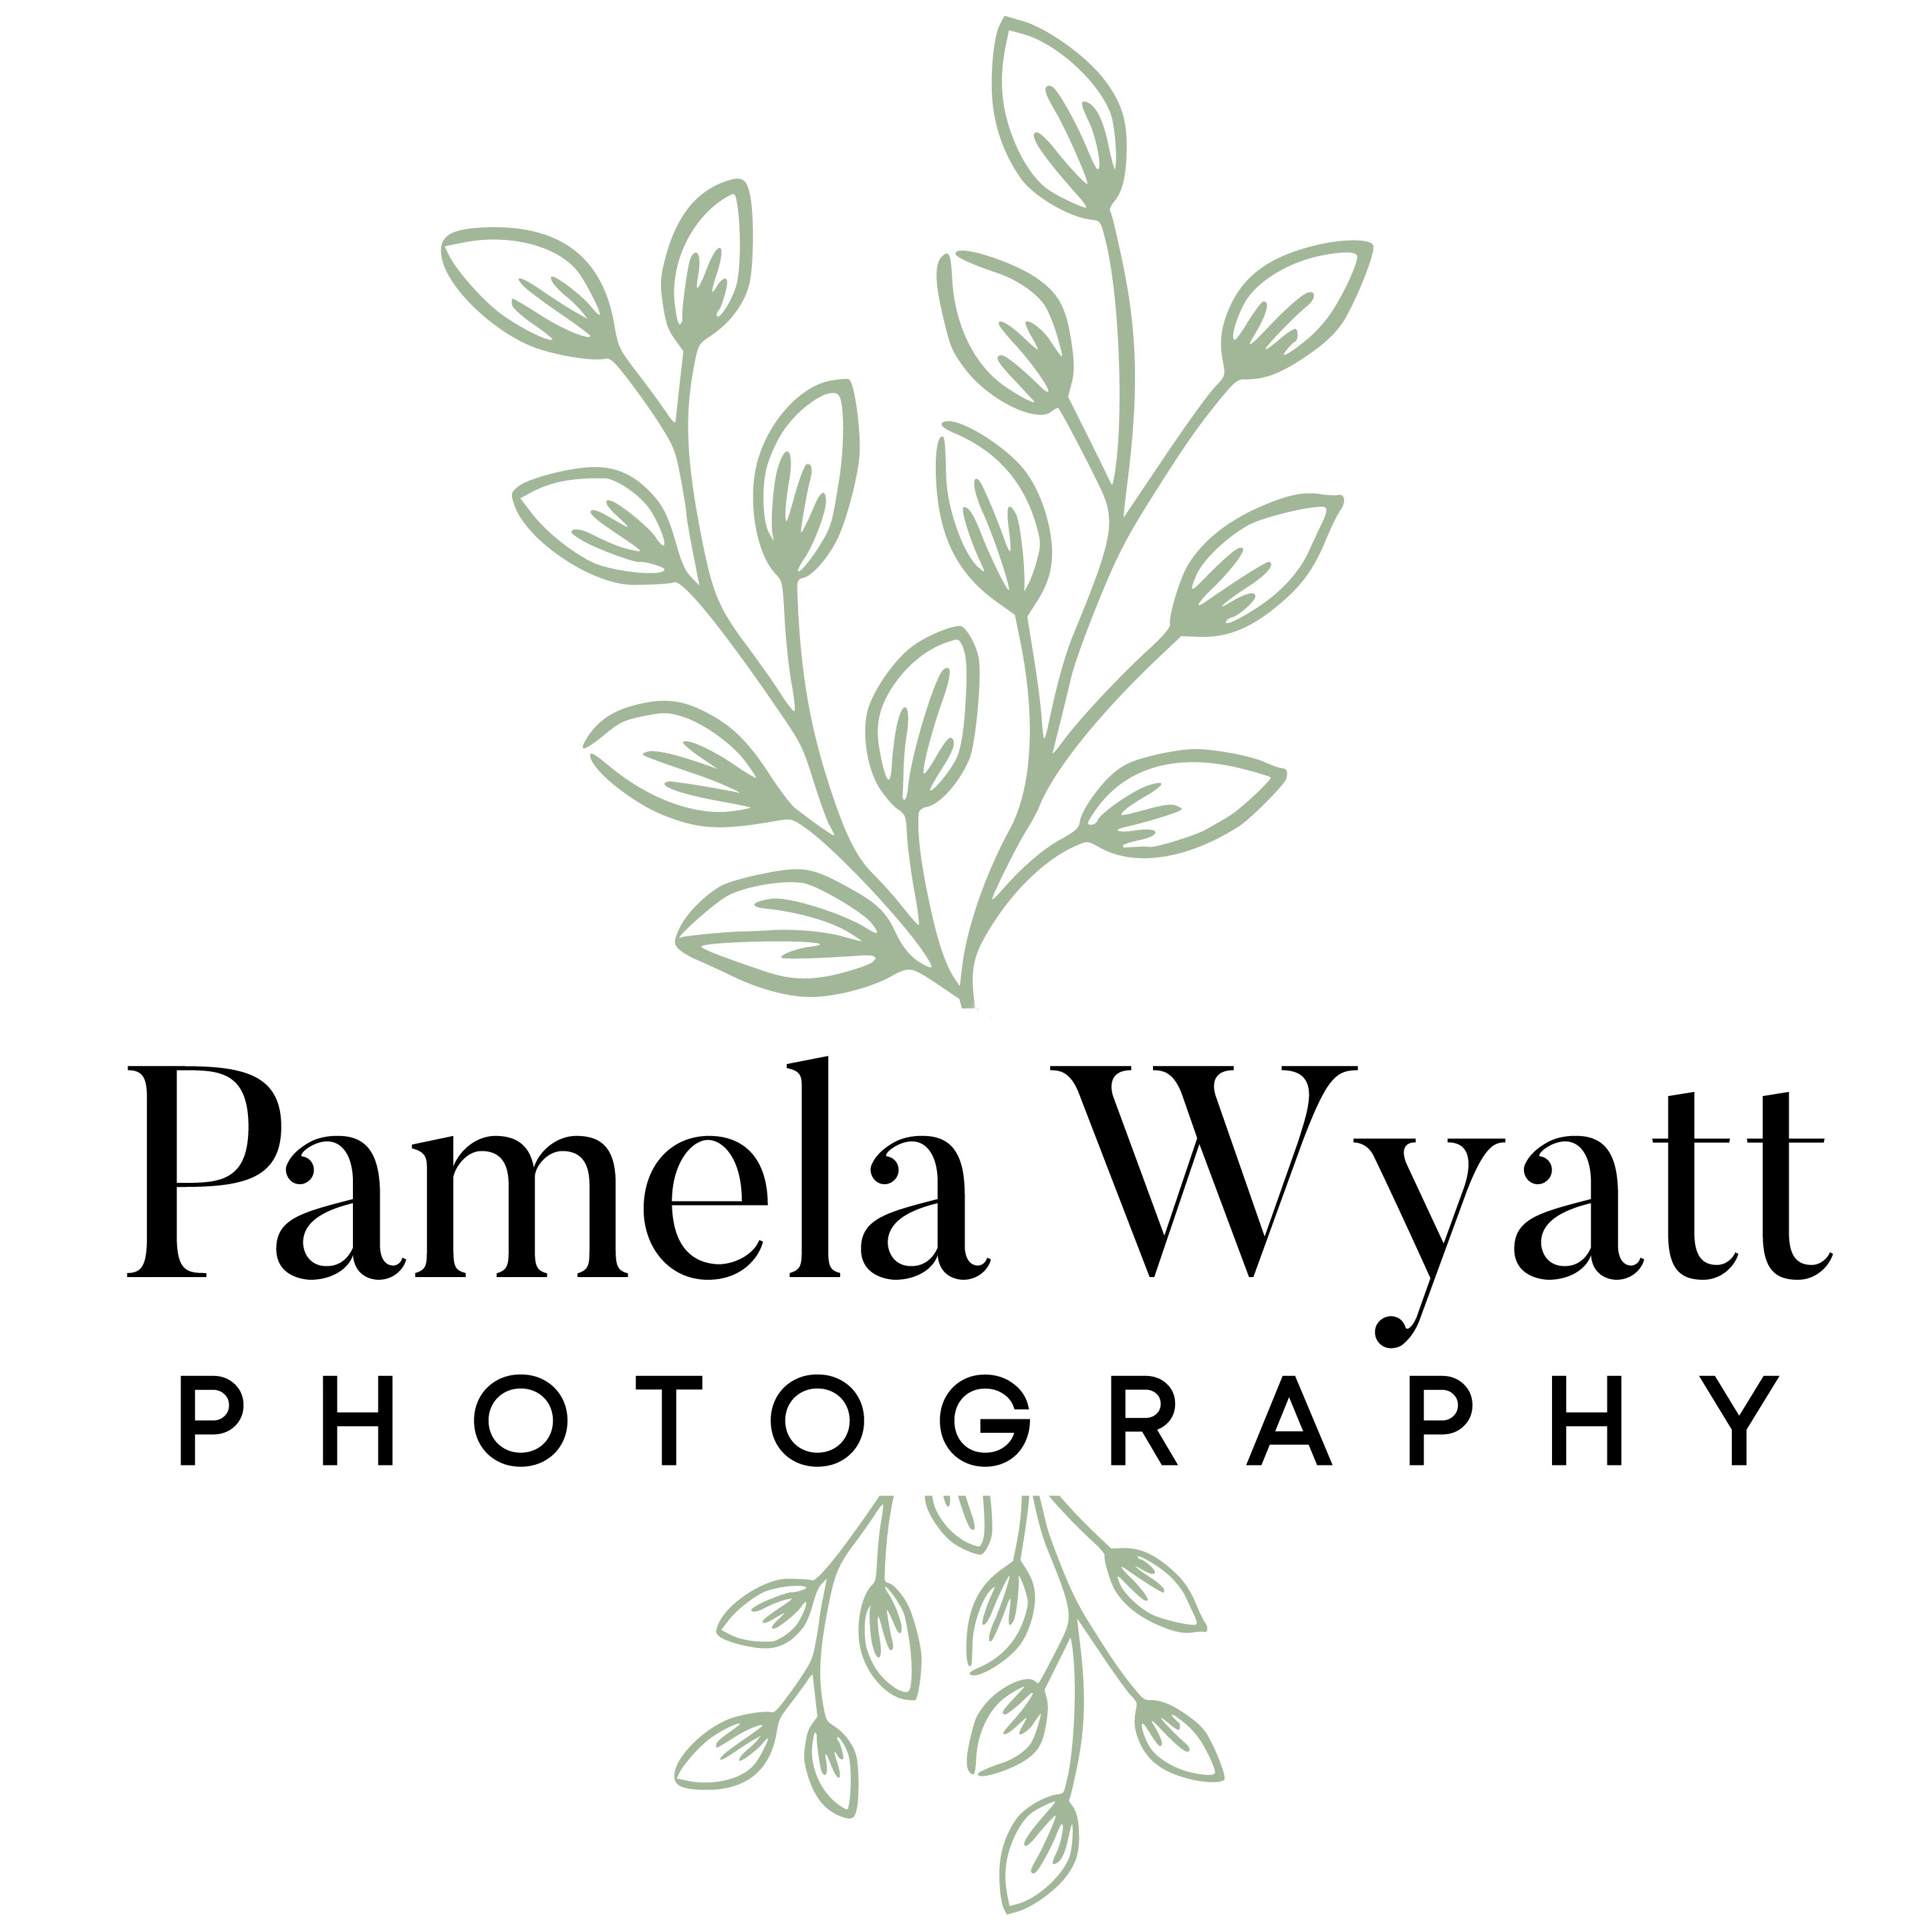 Pamela Wyatt